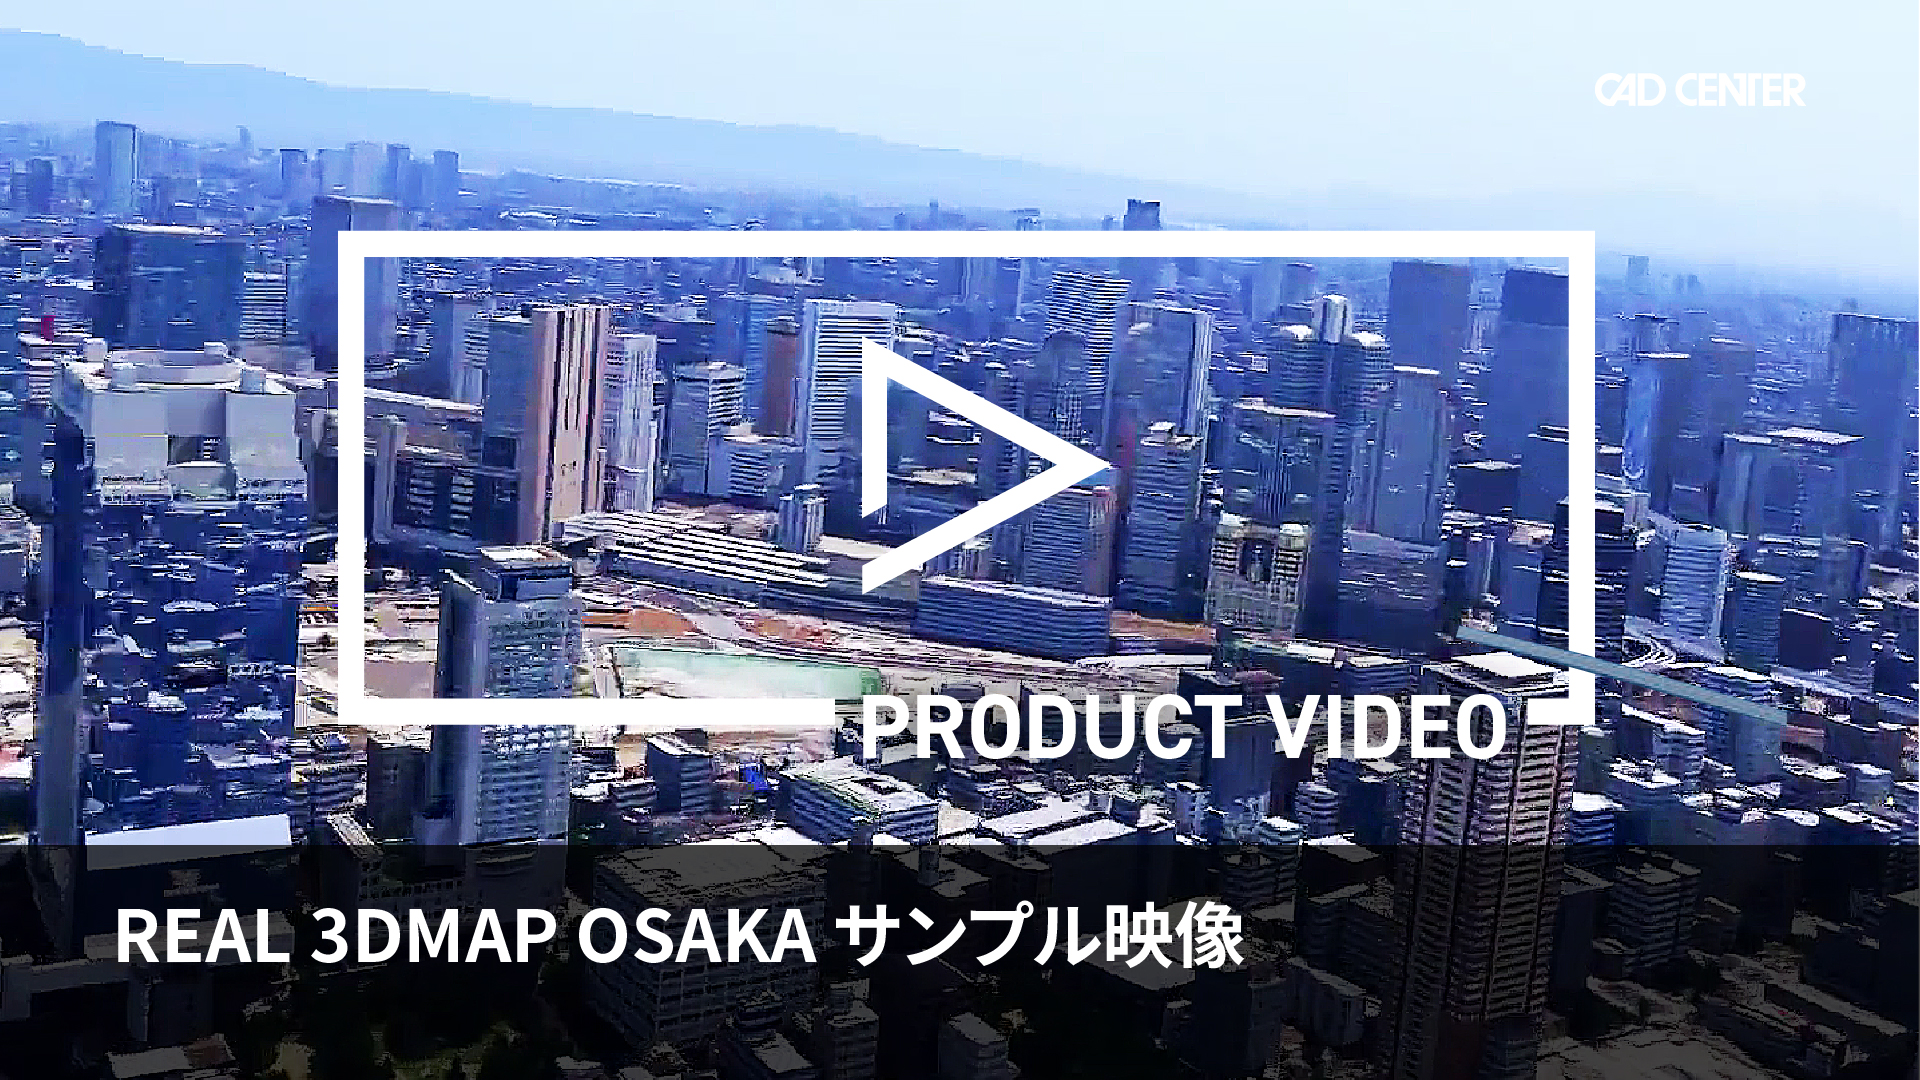 REAL 3DMAP OSAKA サンプル映像